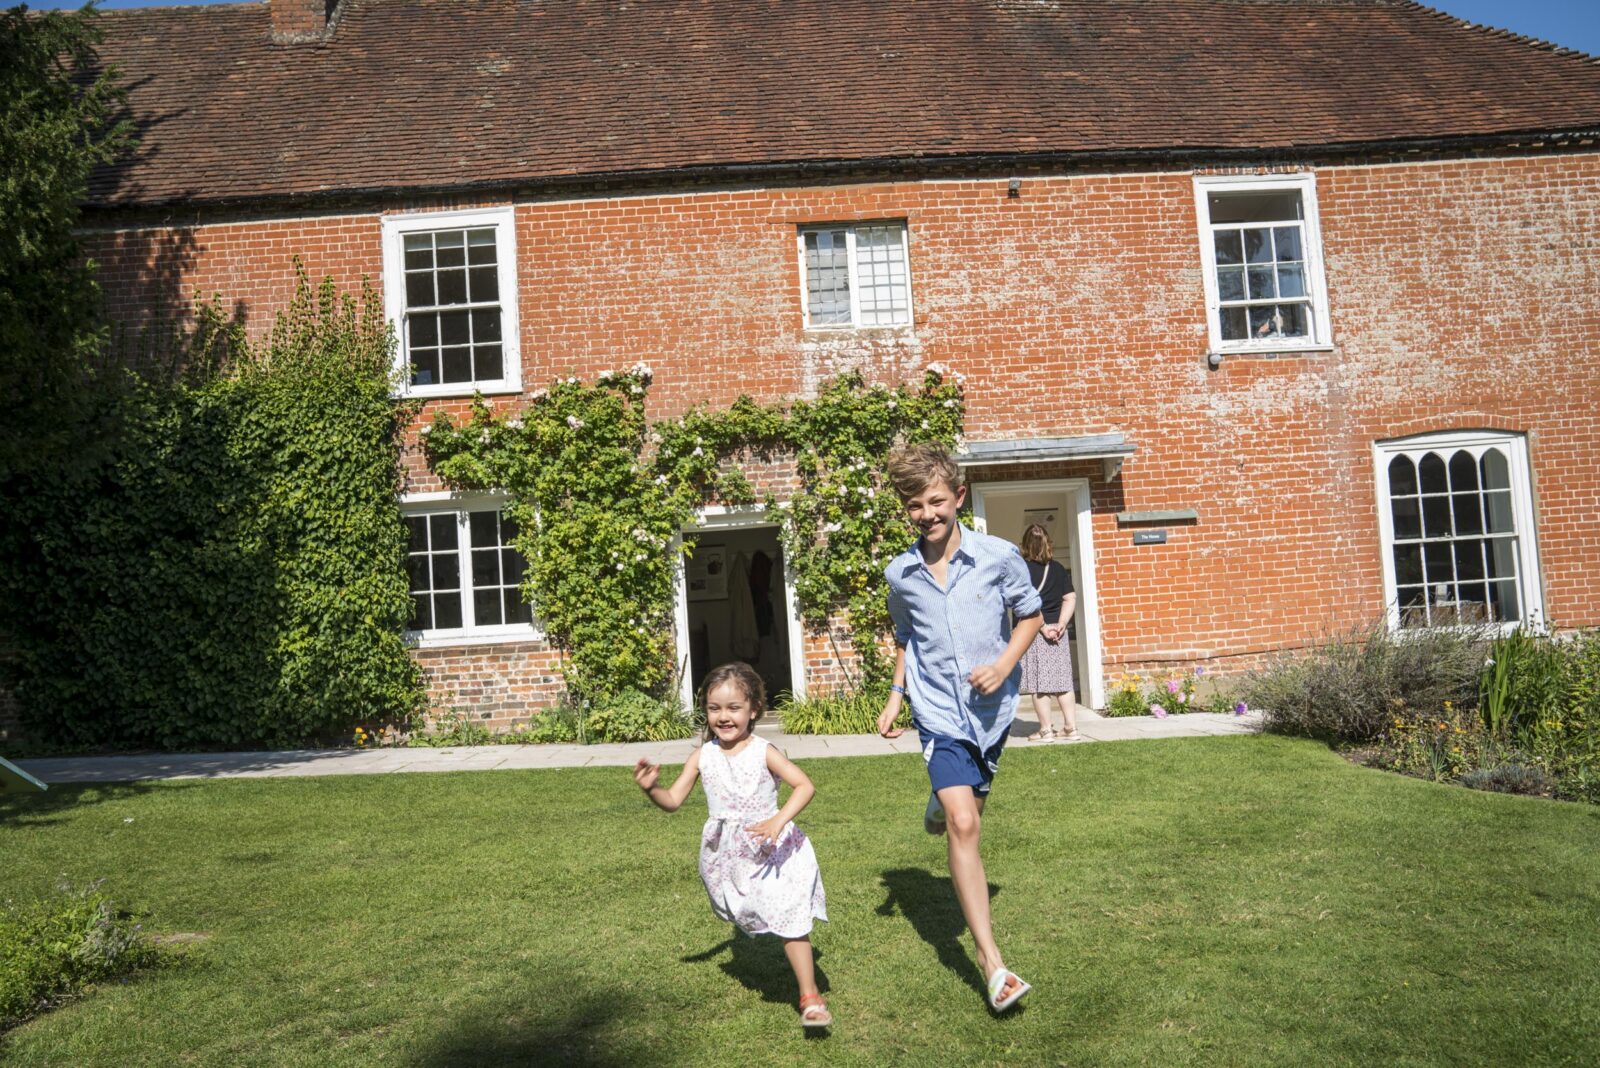 Children running across the lawn at Jane Austen's House